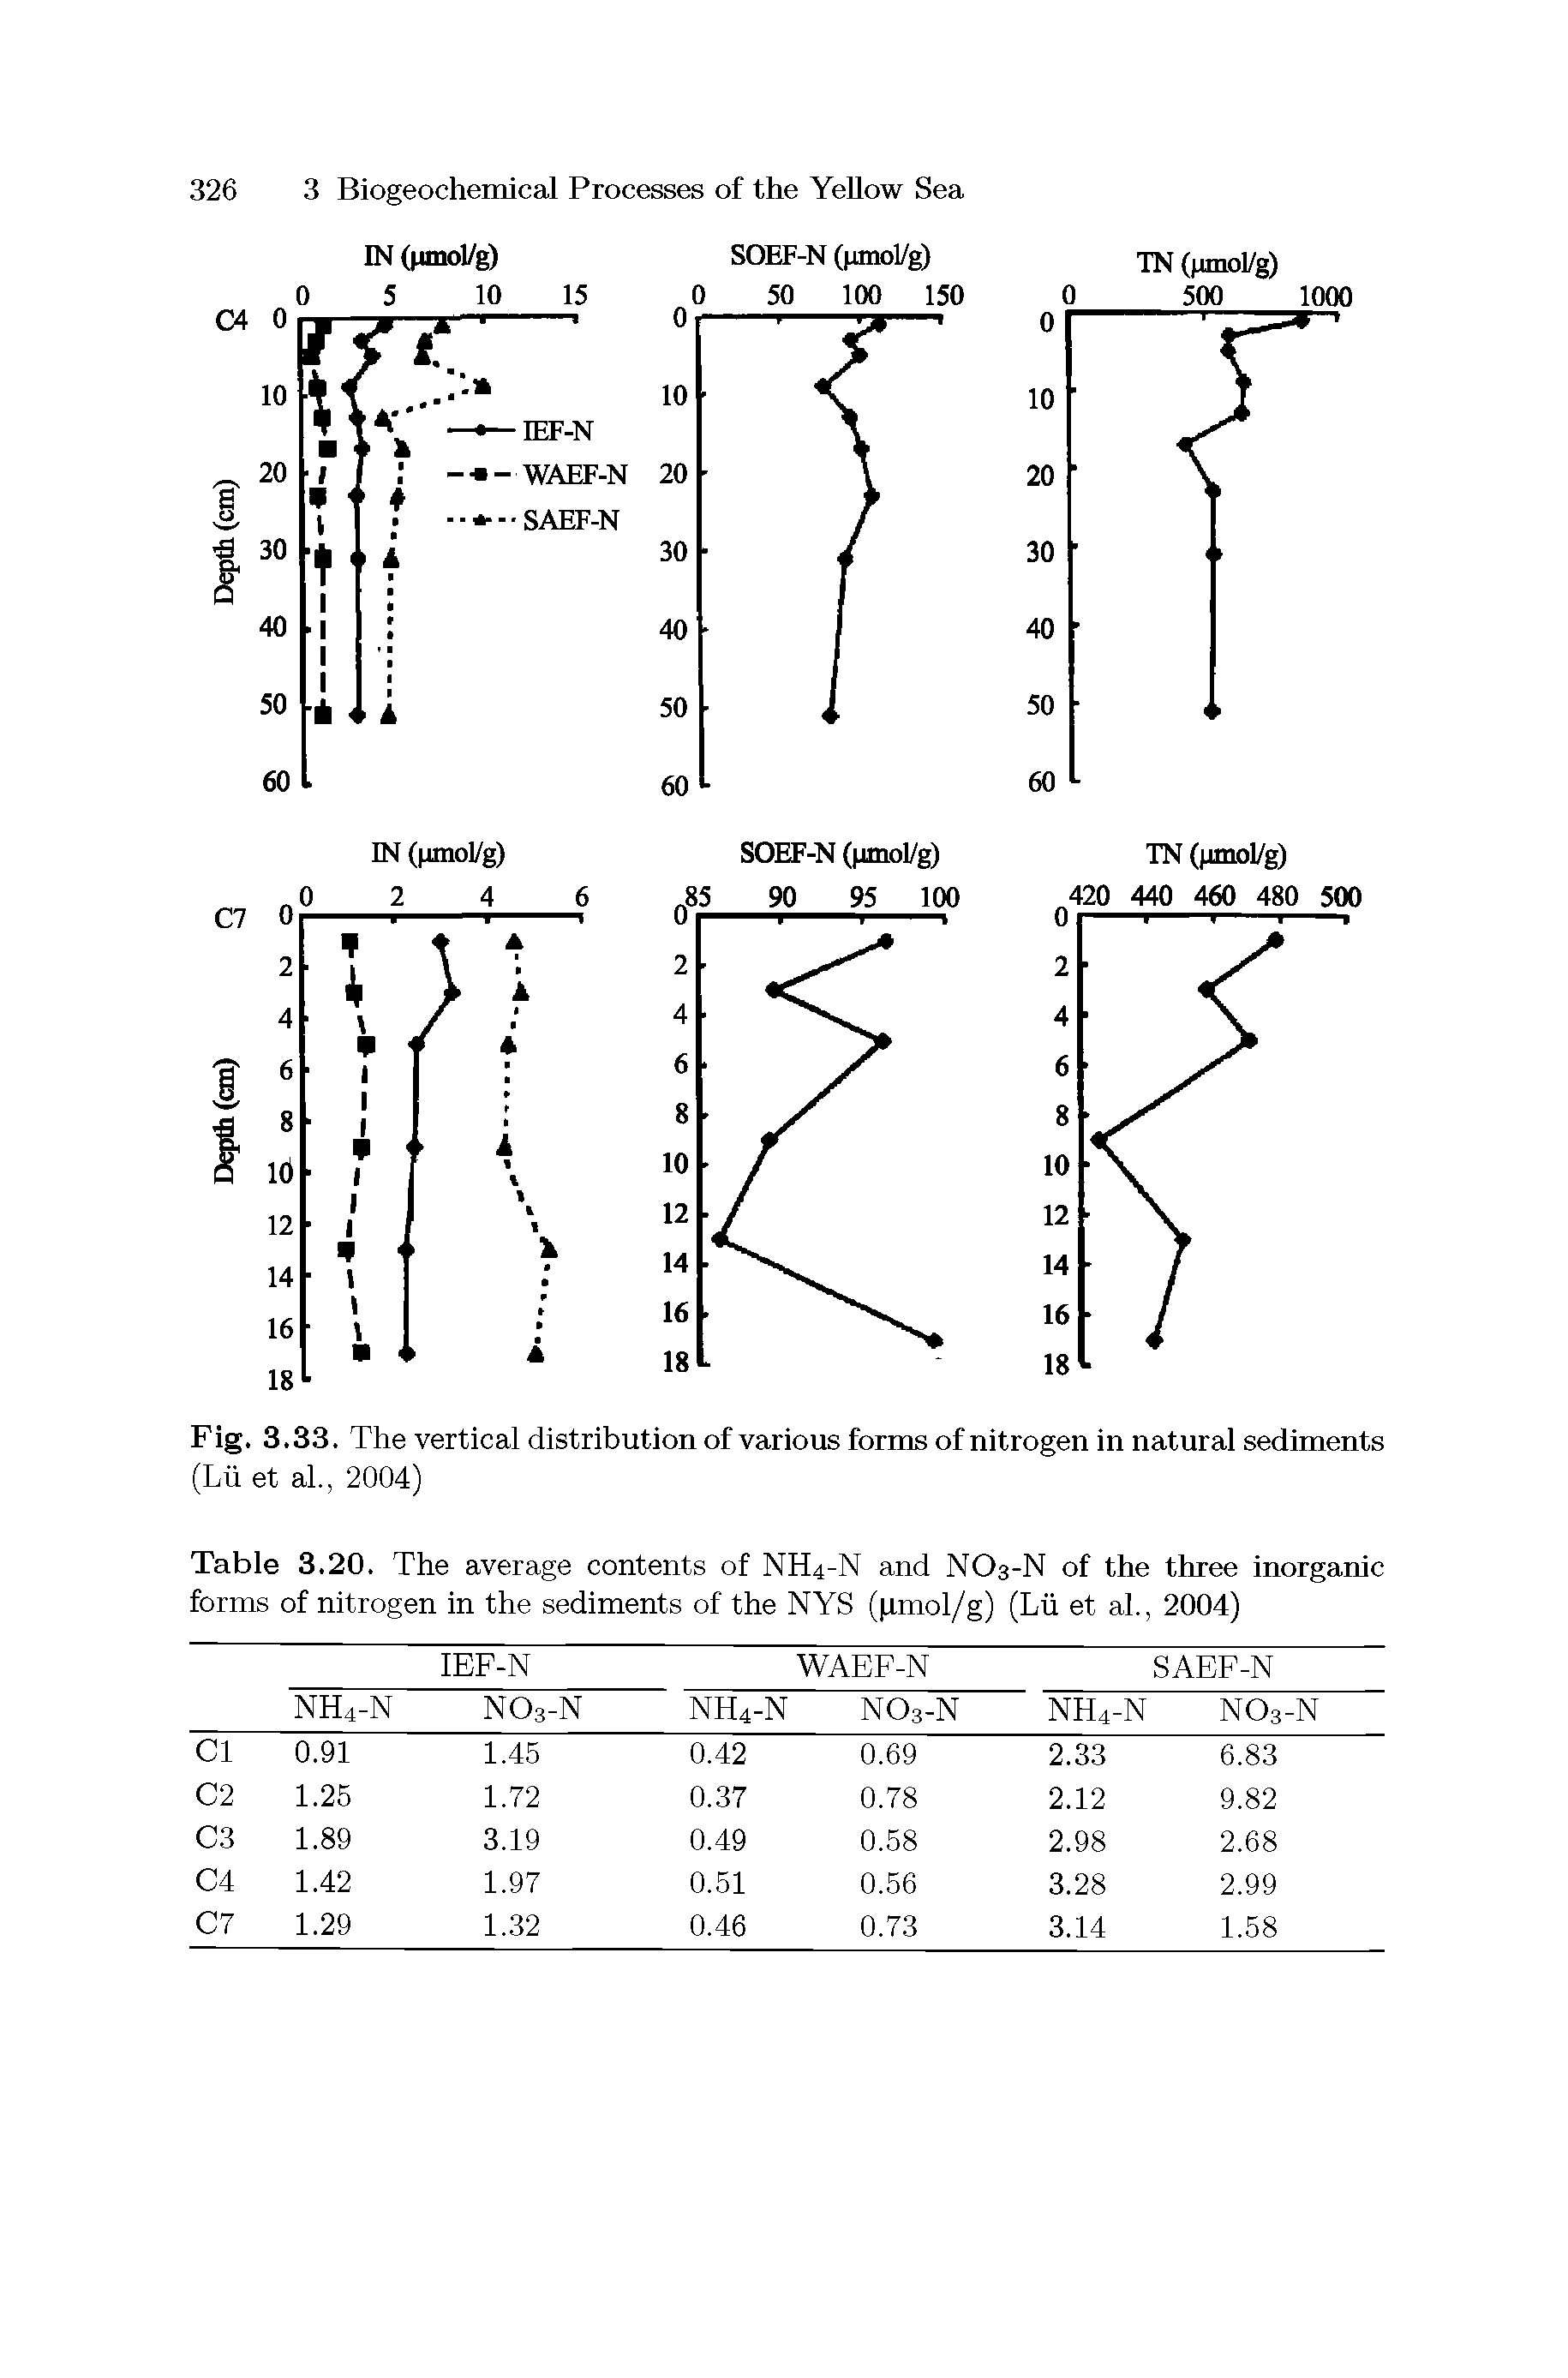 Fig. 3.33. The vertical distribution of various forms of nitrogen in natural sediments (Lii et al., 2004)...